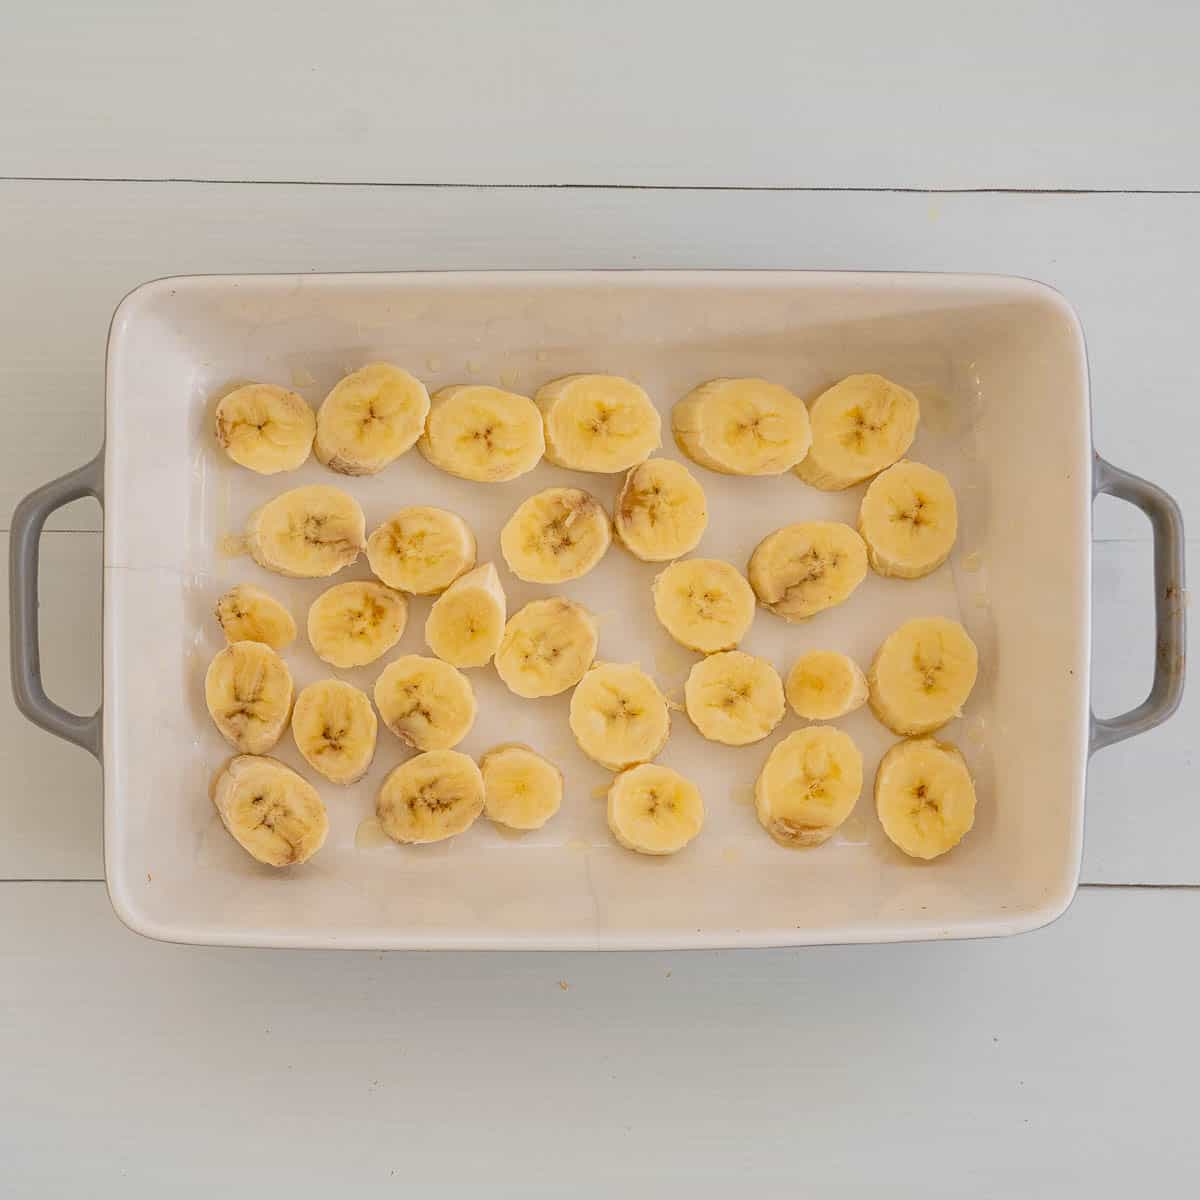 Banana slices covering the bottom of a rectangular baking dish.